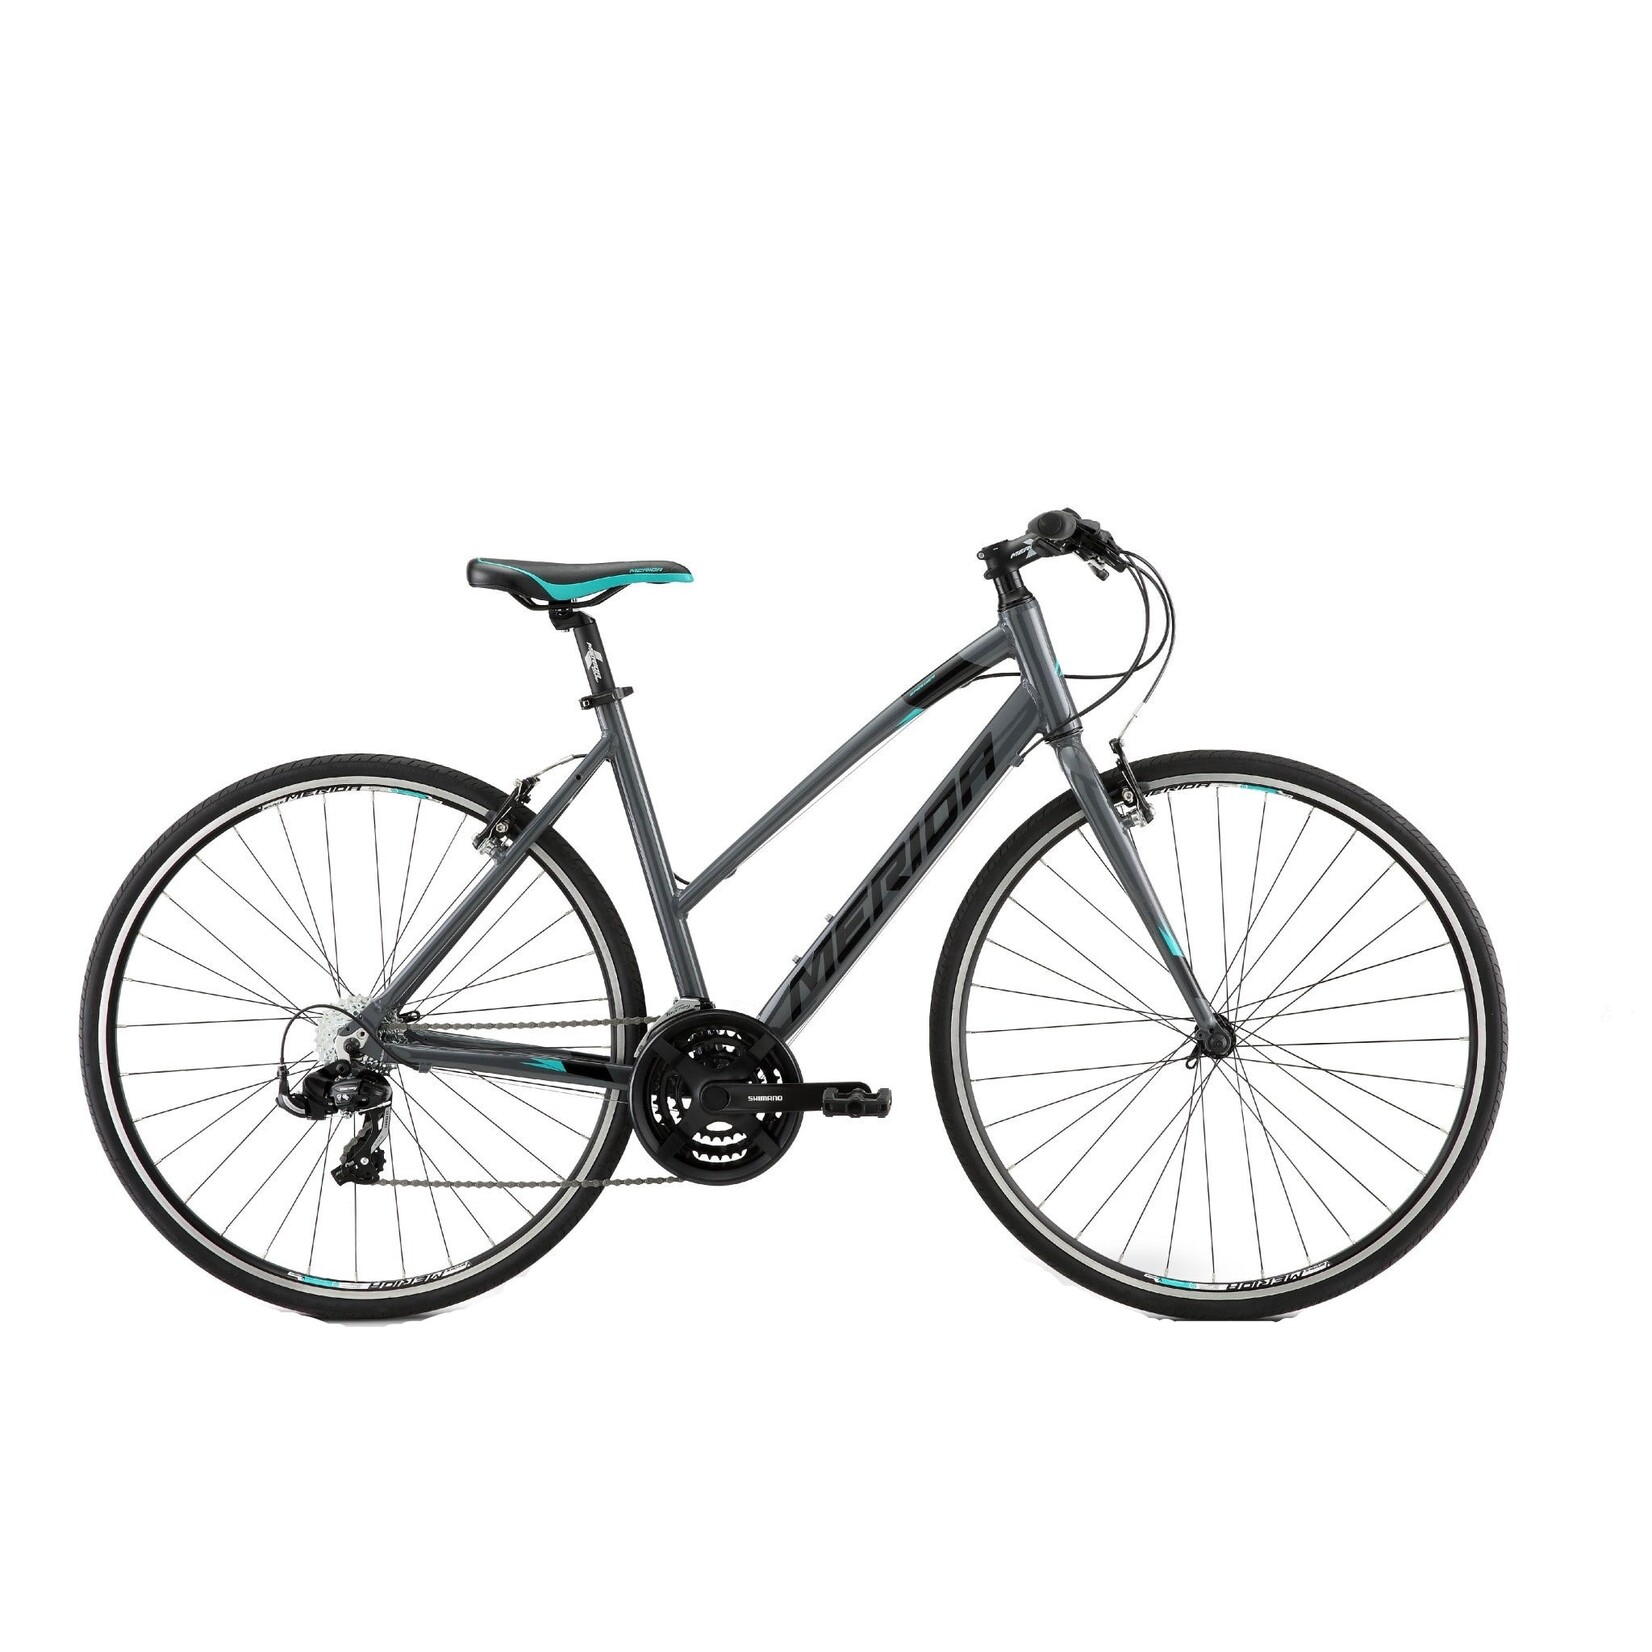 Merida Merida 2021 Speeder 10 V Women's Road Bike - Glossy Grey(Black/Teal) - Medium